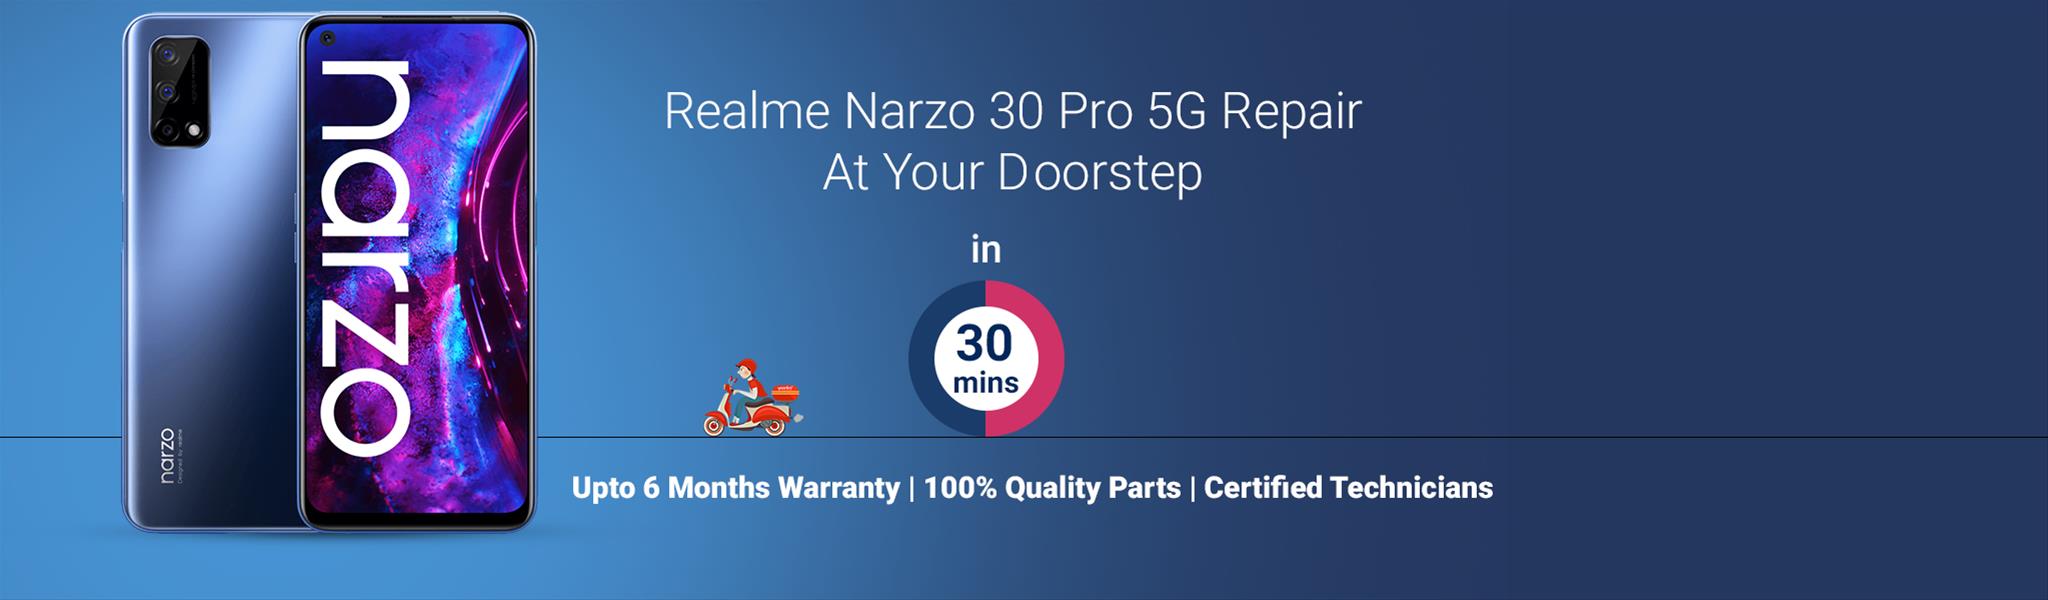 realme-narzo-30-pro-5g-repair.png